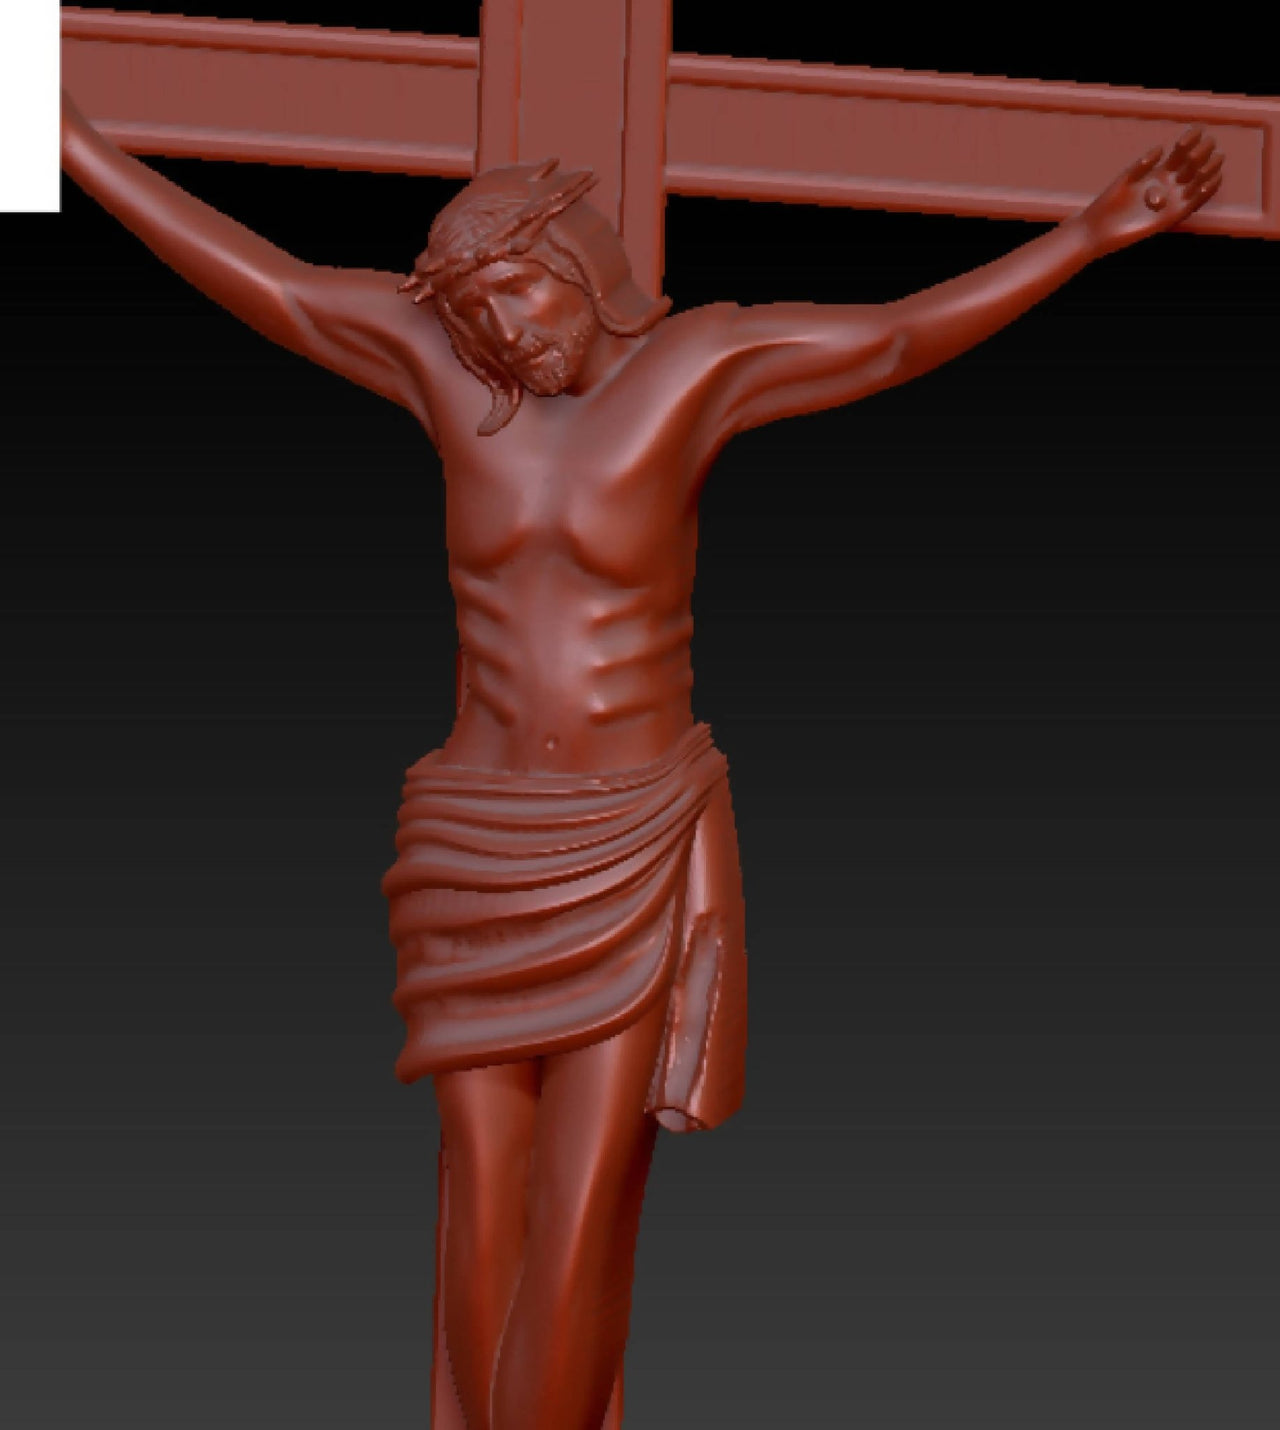 christian cross asghar